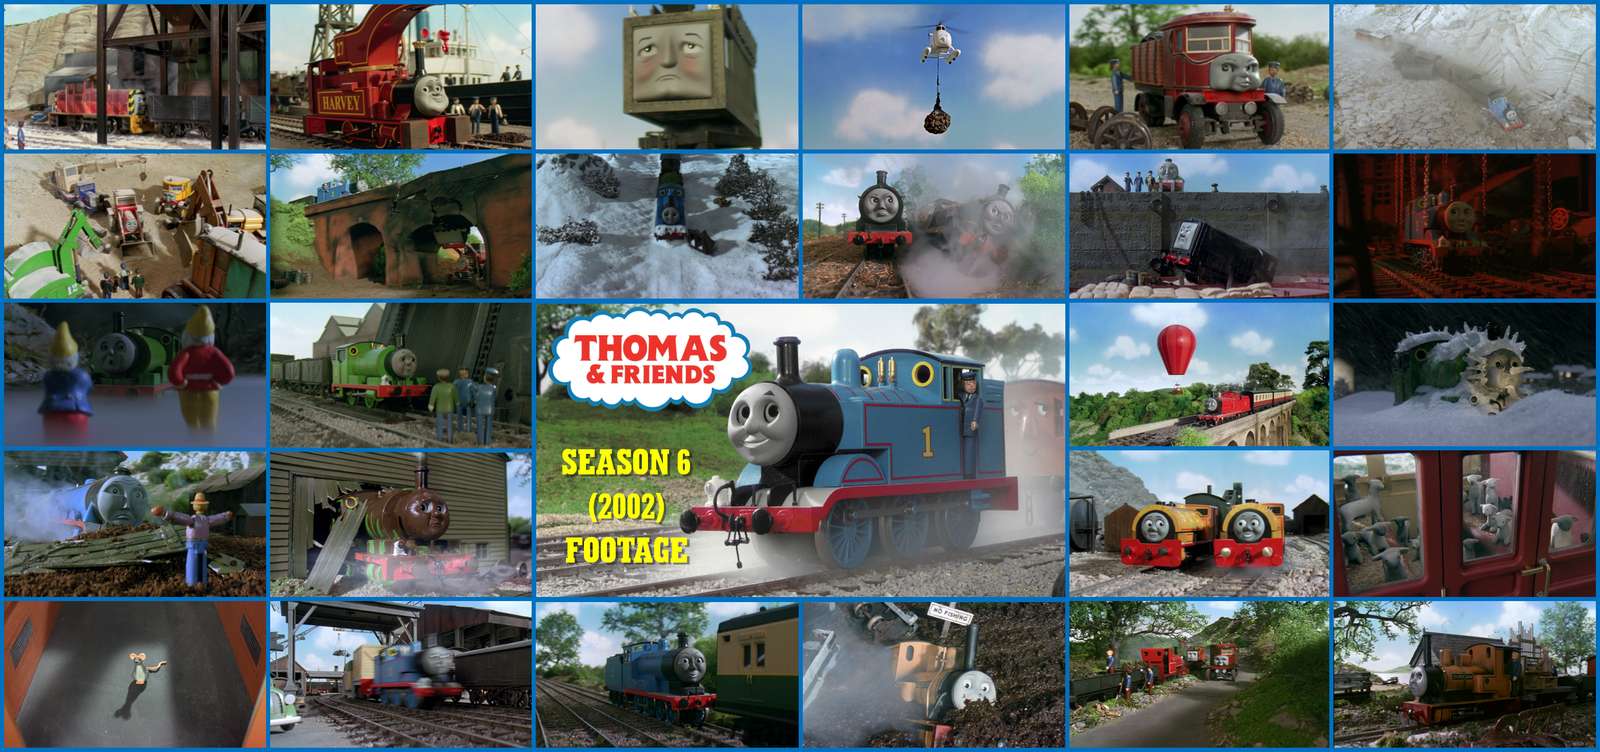 Thomas the Tank Engine Staffel 6 Online-Puzzle vom Foto